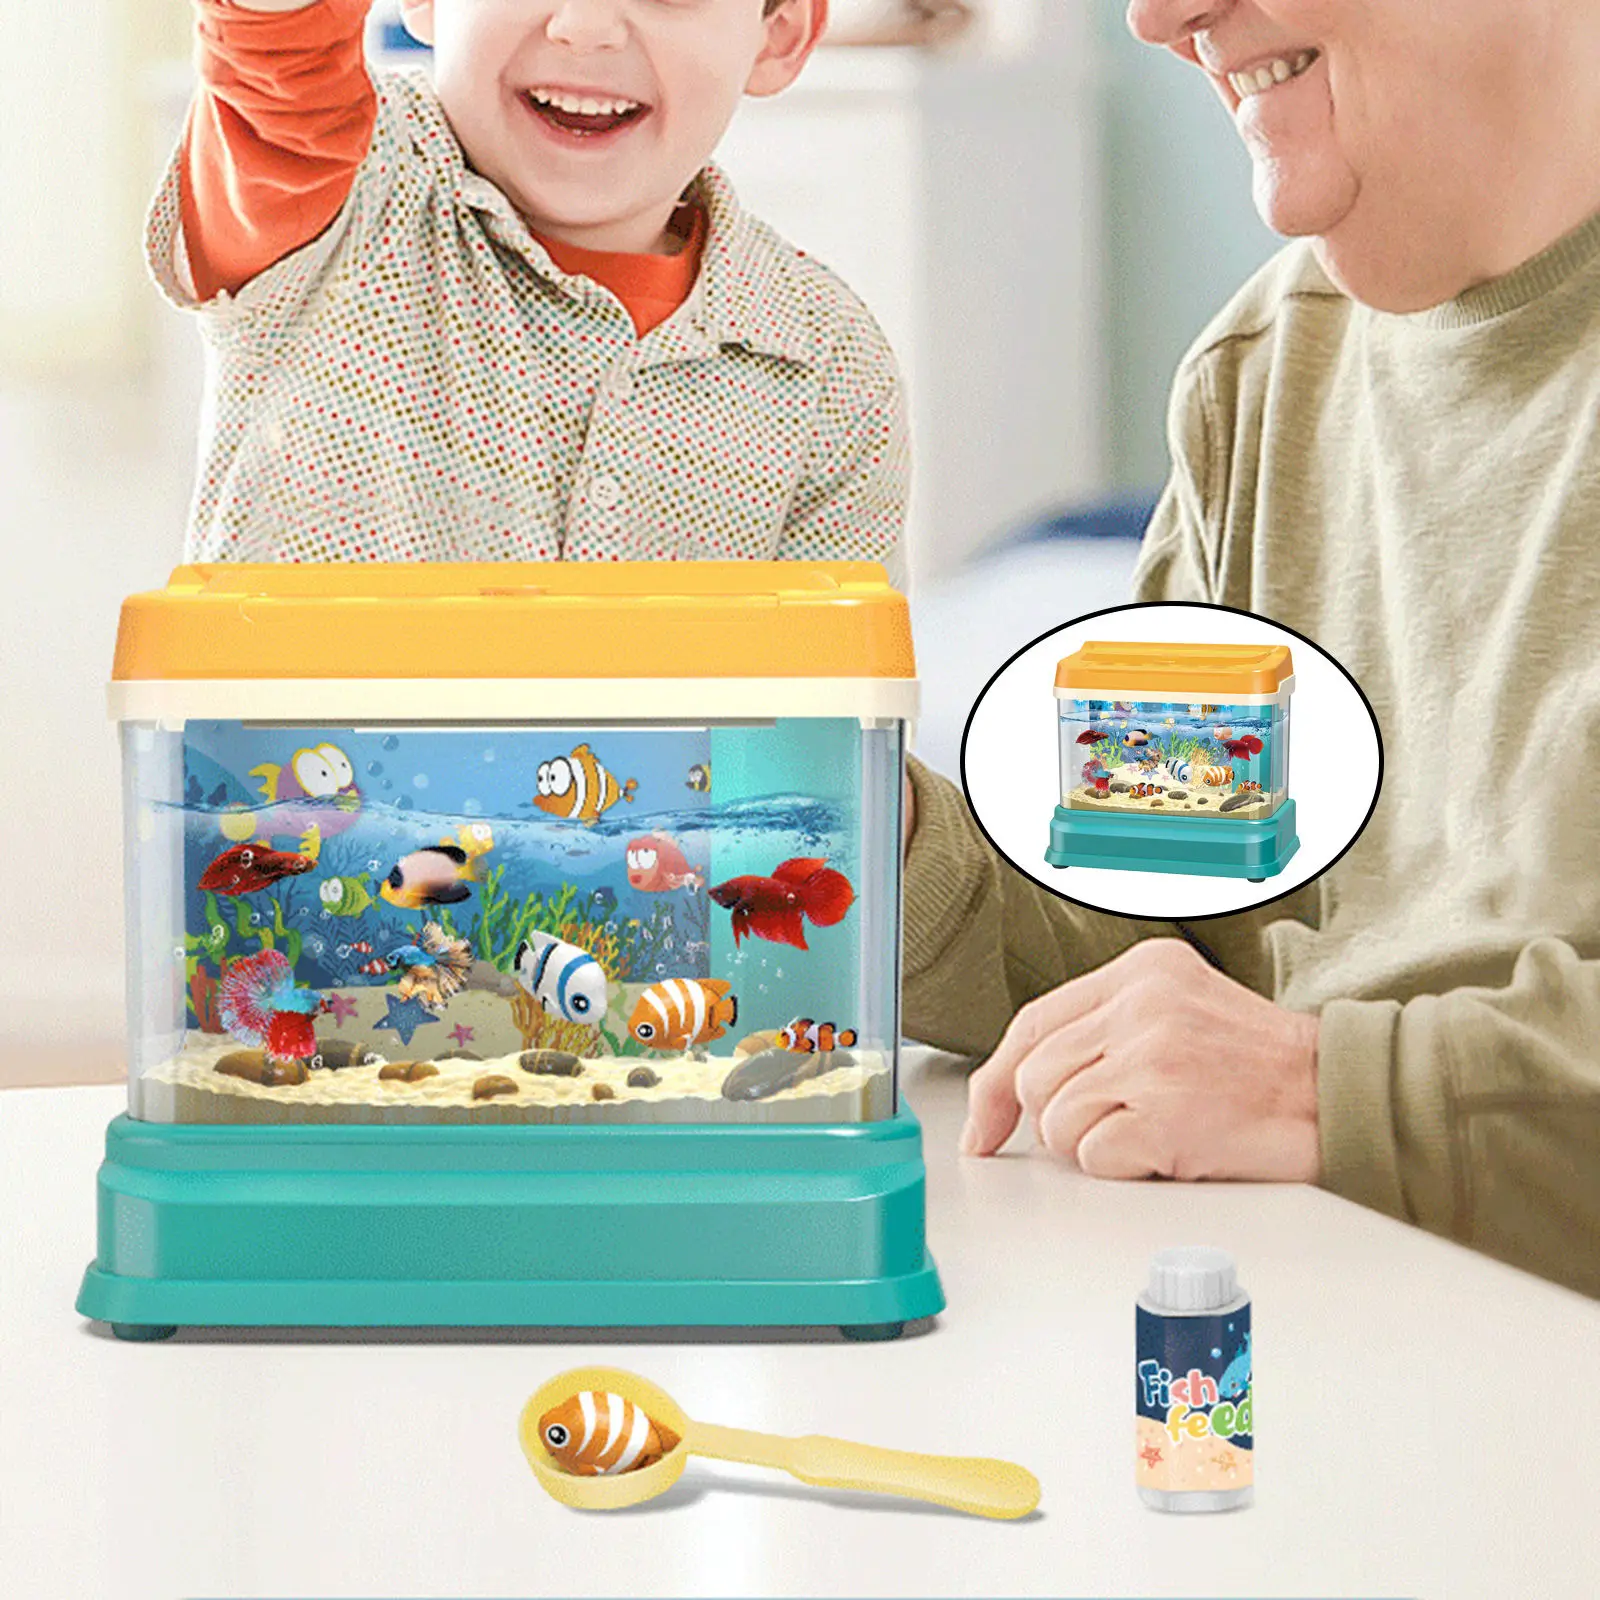 Kids Fishing Toy Simulation Games Aquarium Fish Rod Educational Music Light